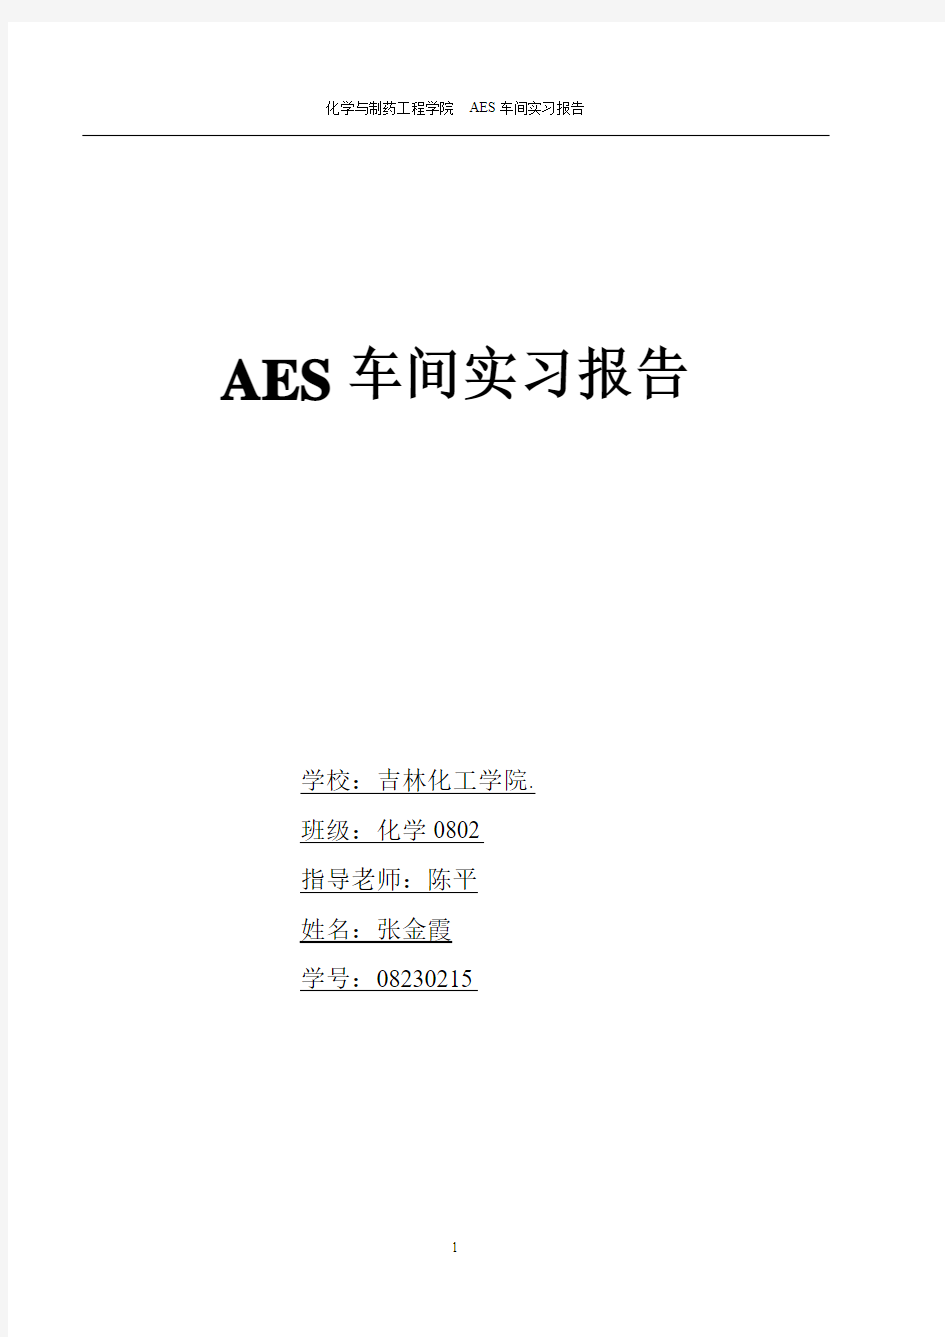 AES报告